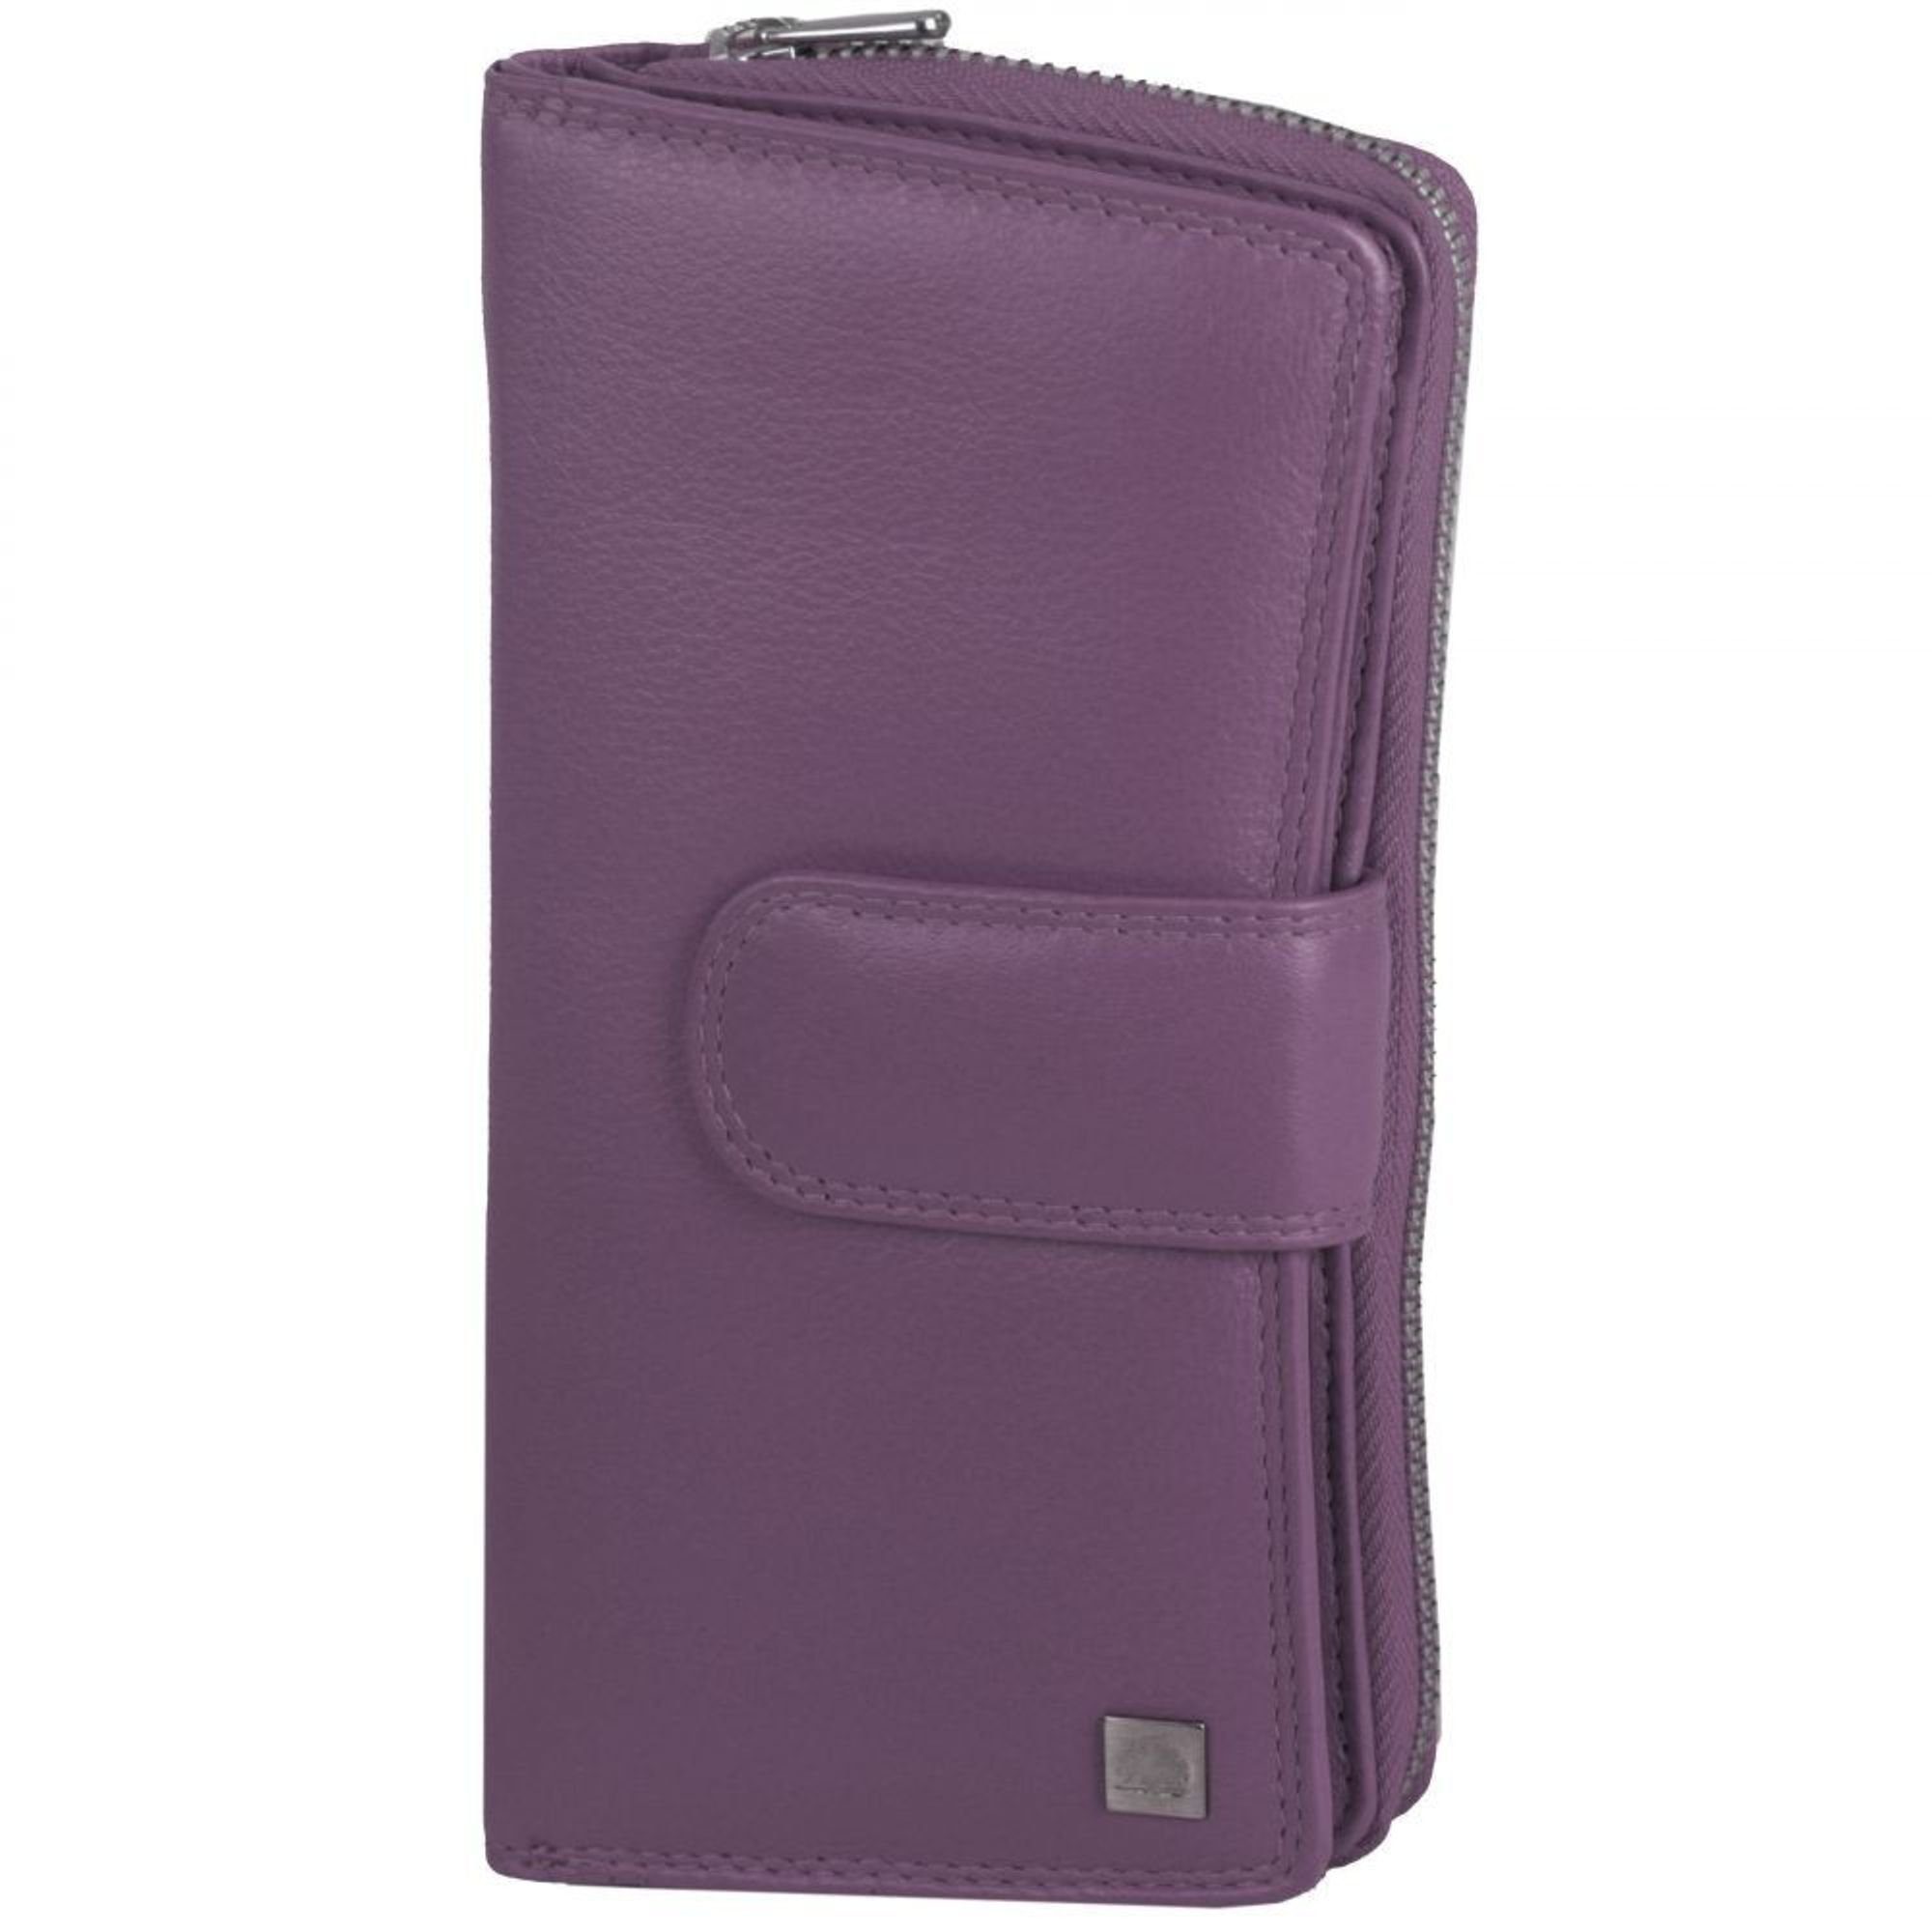 Greenburry Spongy, Leder Geldbörse purple